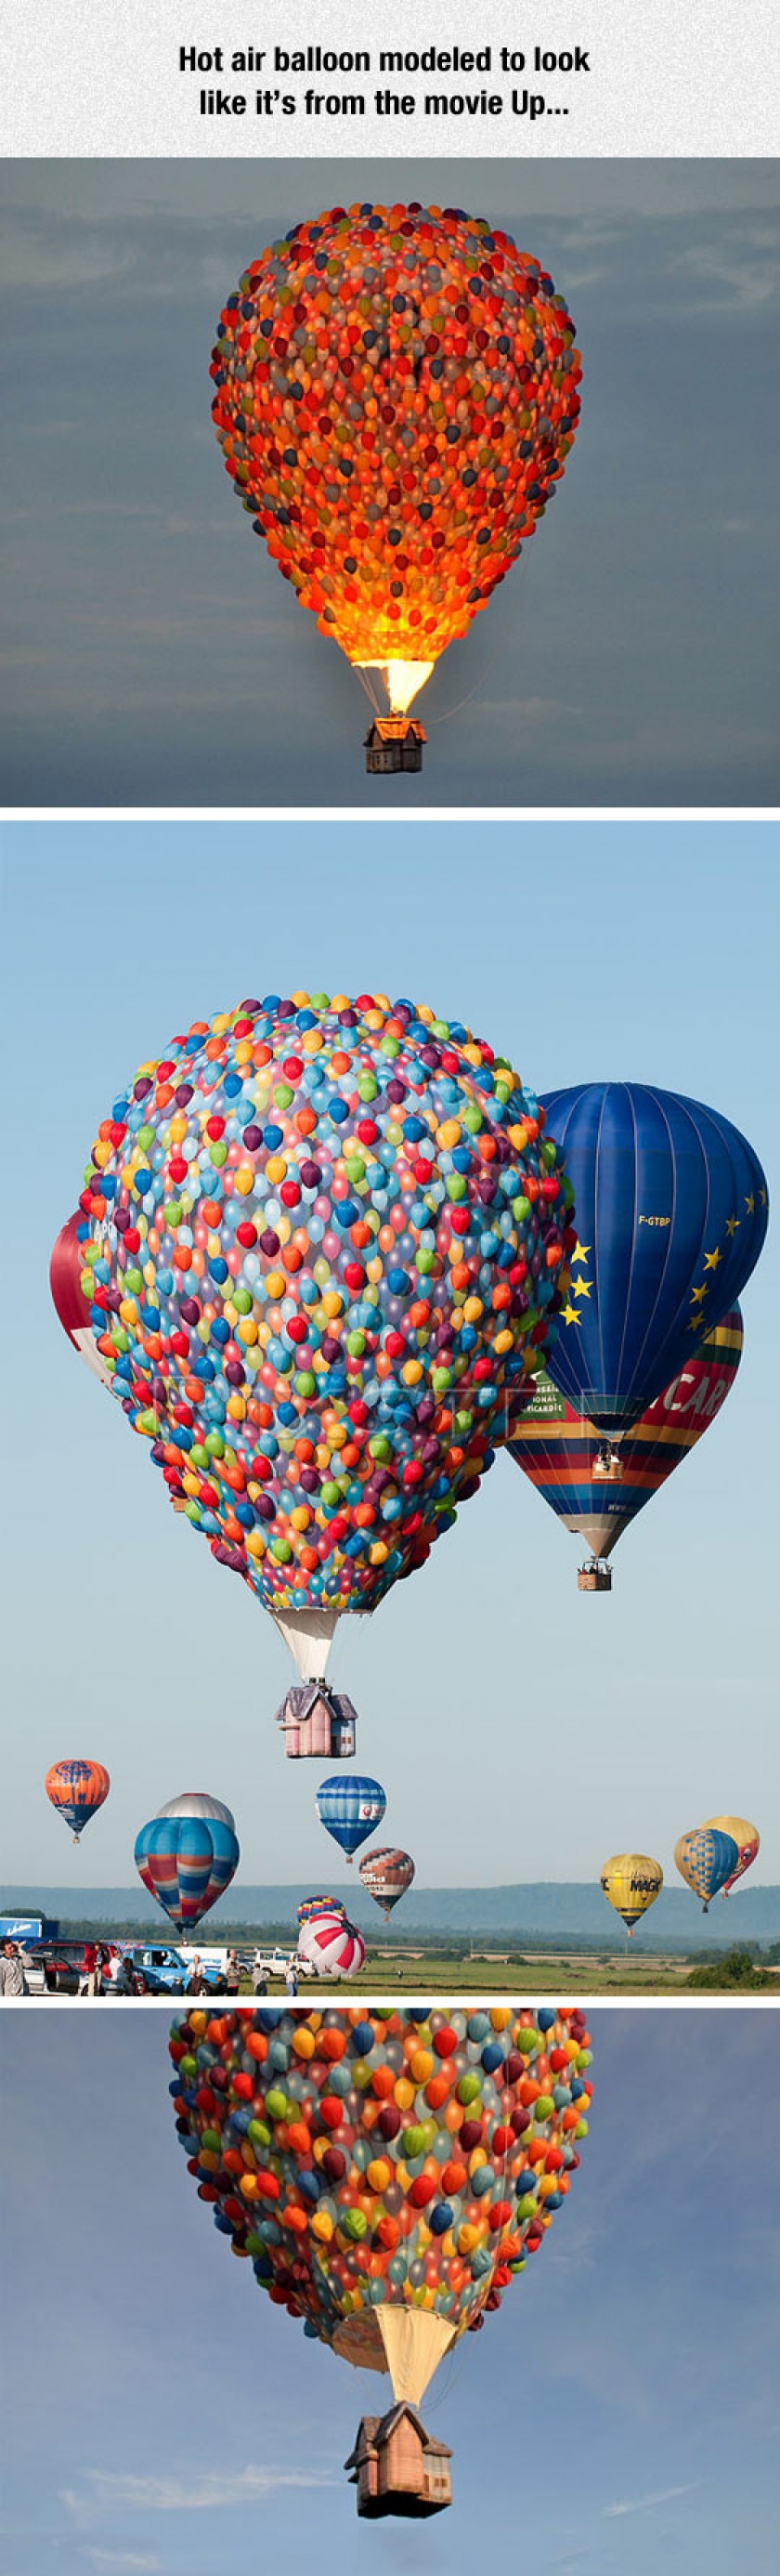 Up Hot Air Balloon